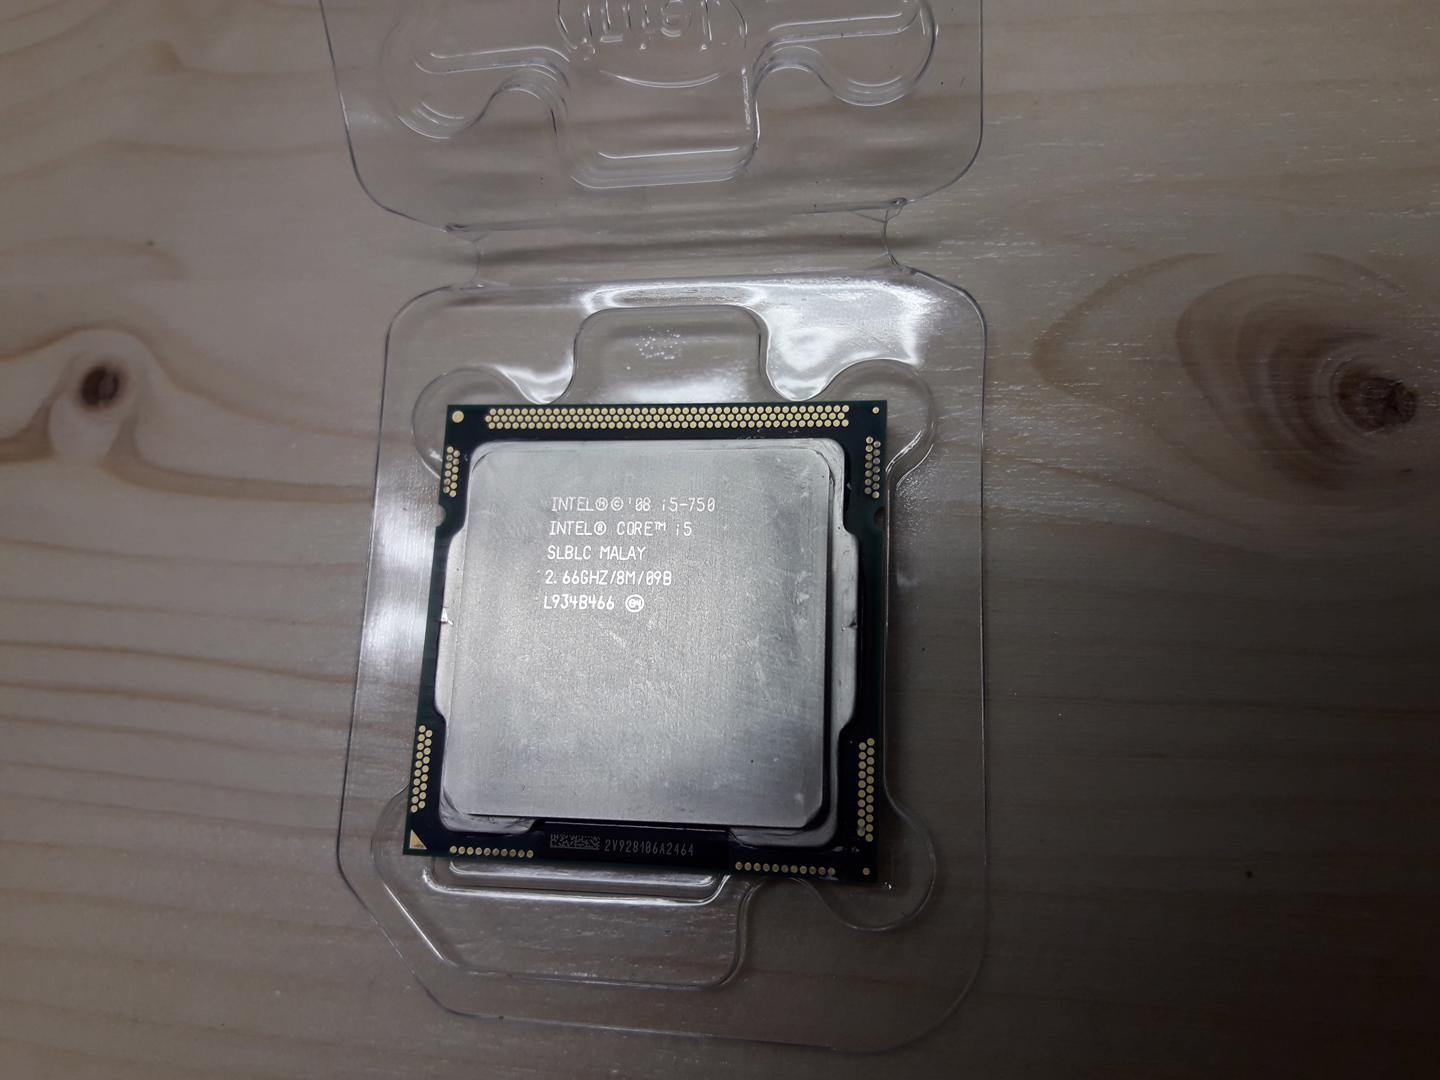 Procesor Intel Core I5-750 - foto 1